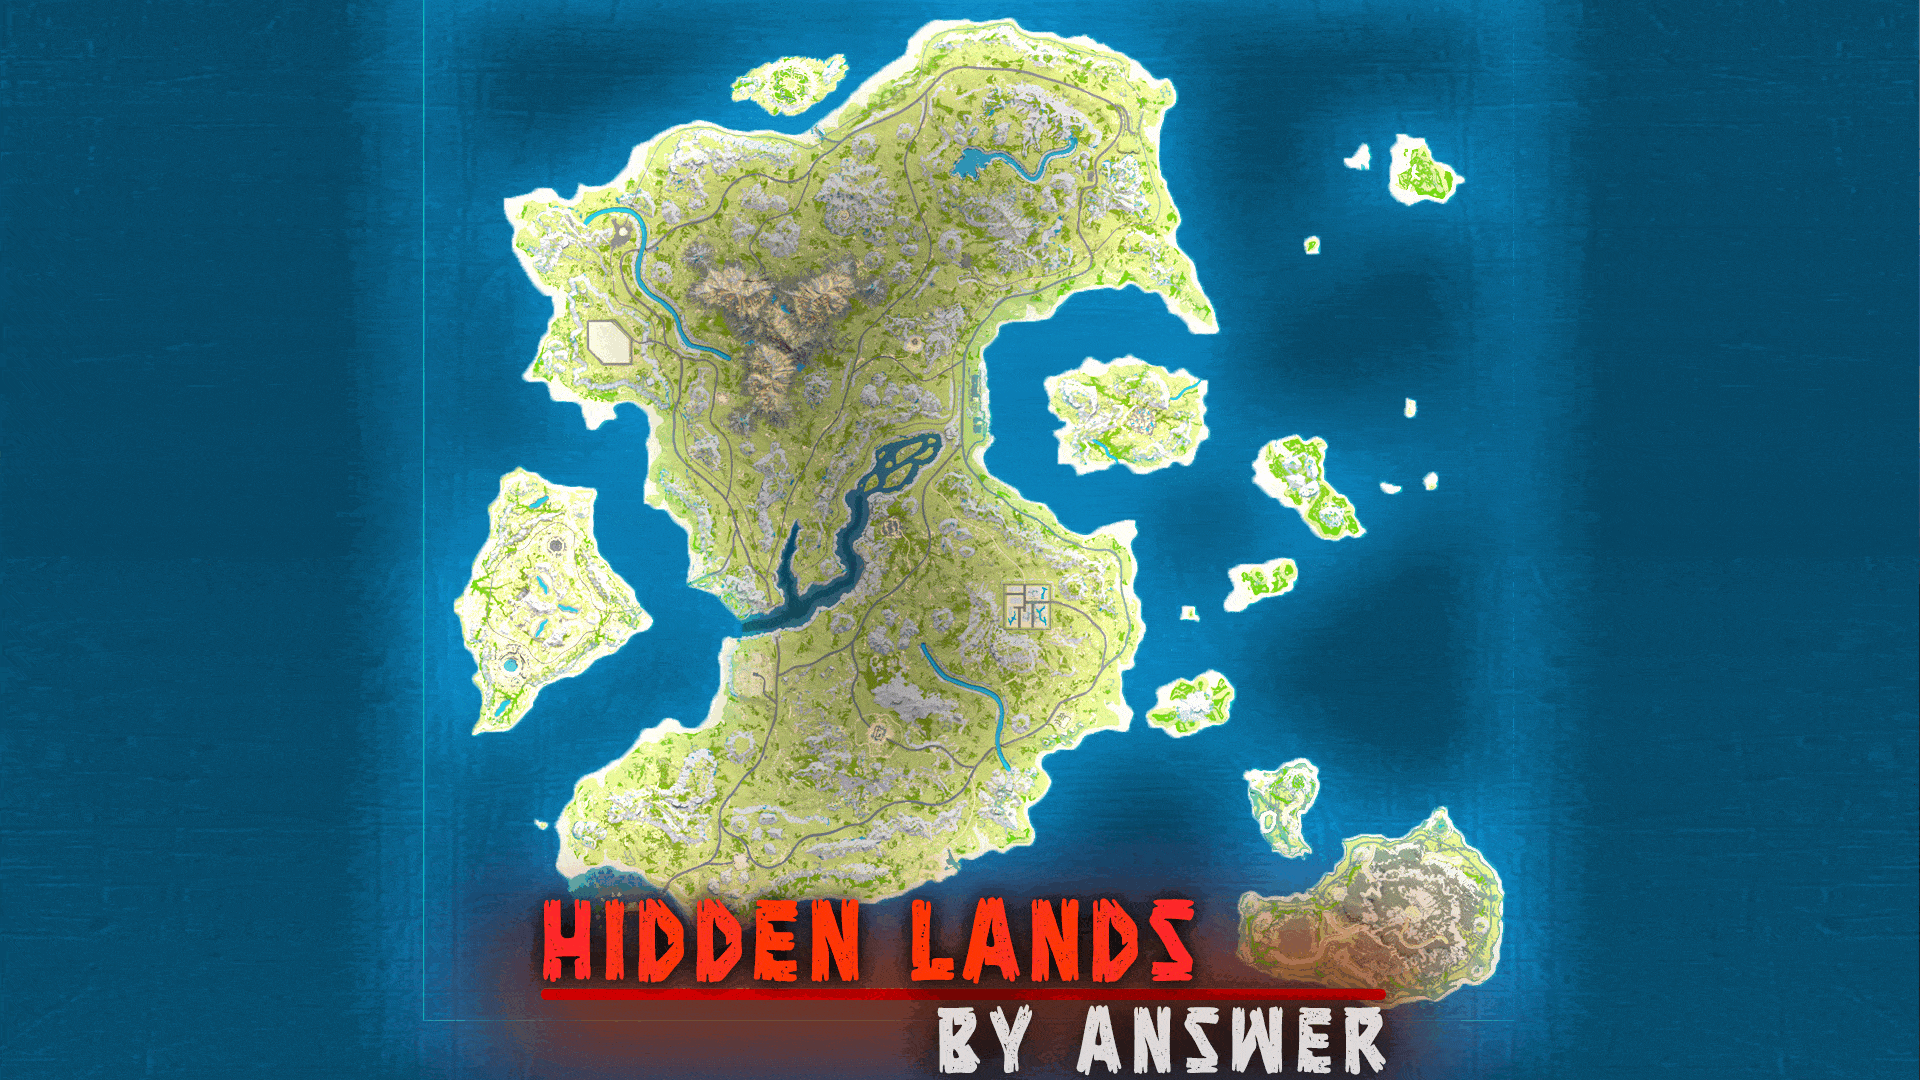 More information about "Hidden Lands"